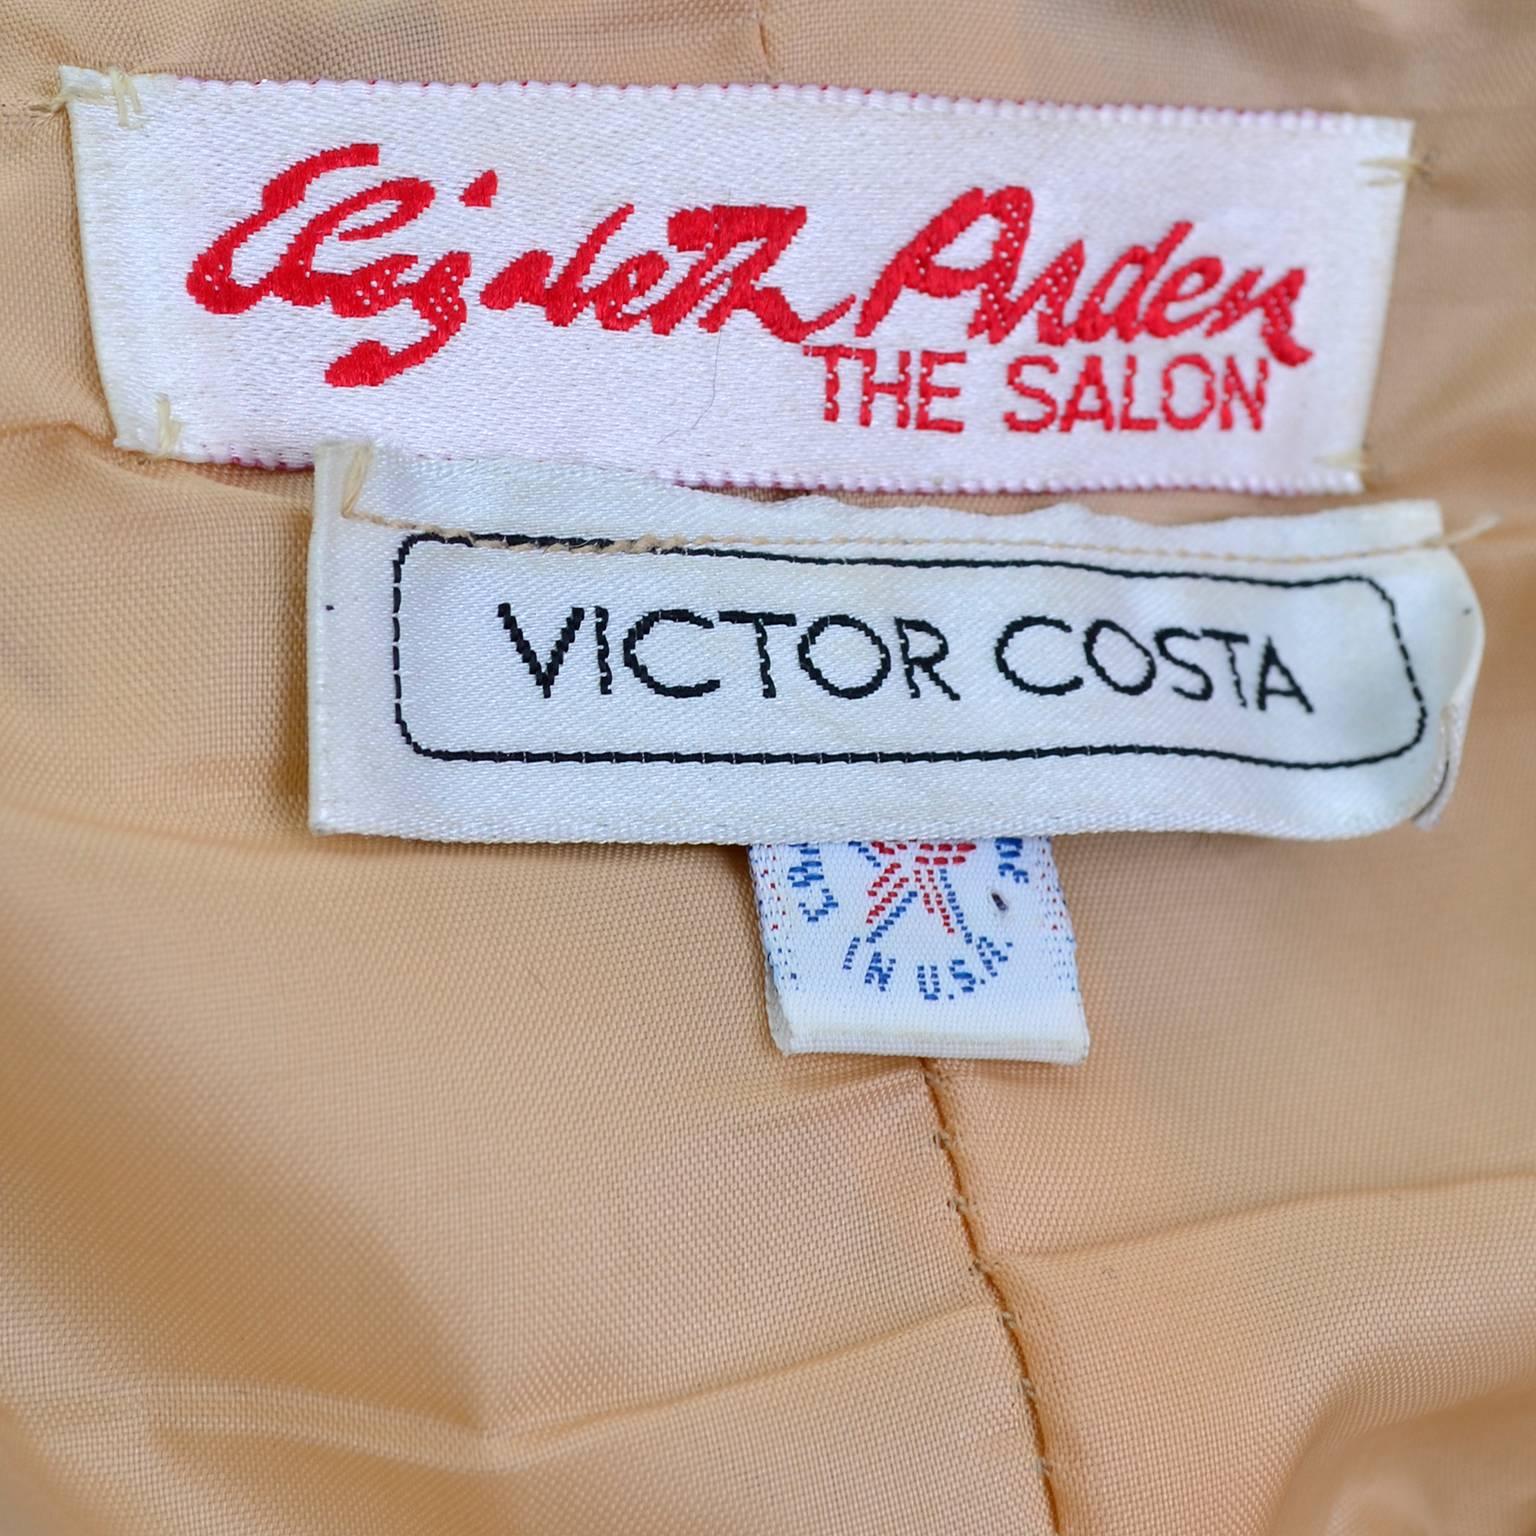 Victor Costa Elizabeth Arden Black Sculpted Avant Garde Vintage Dress 4